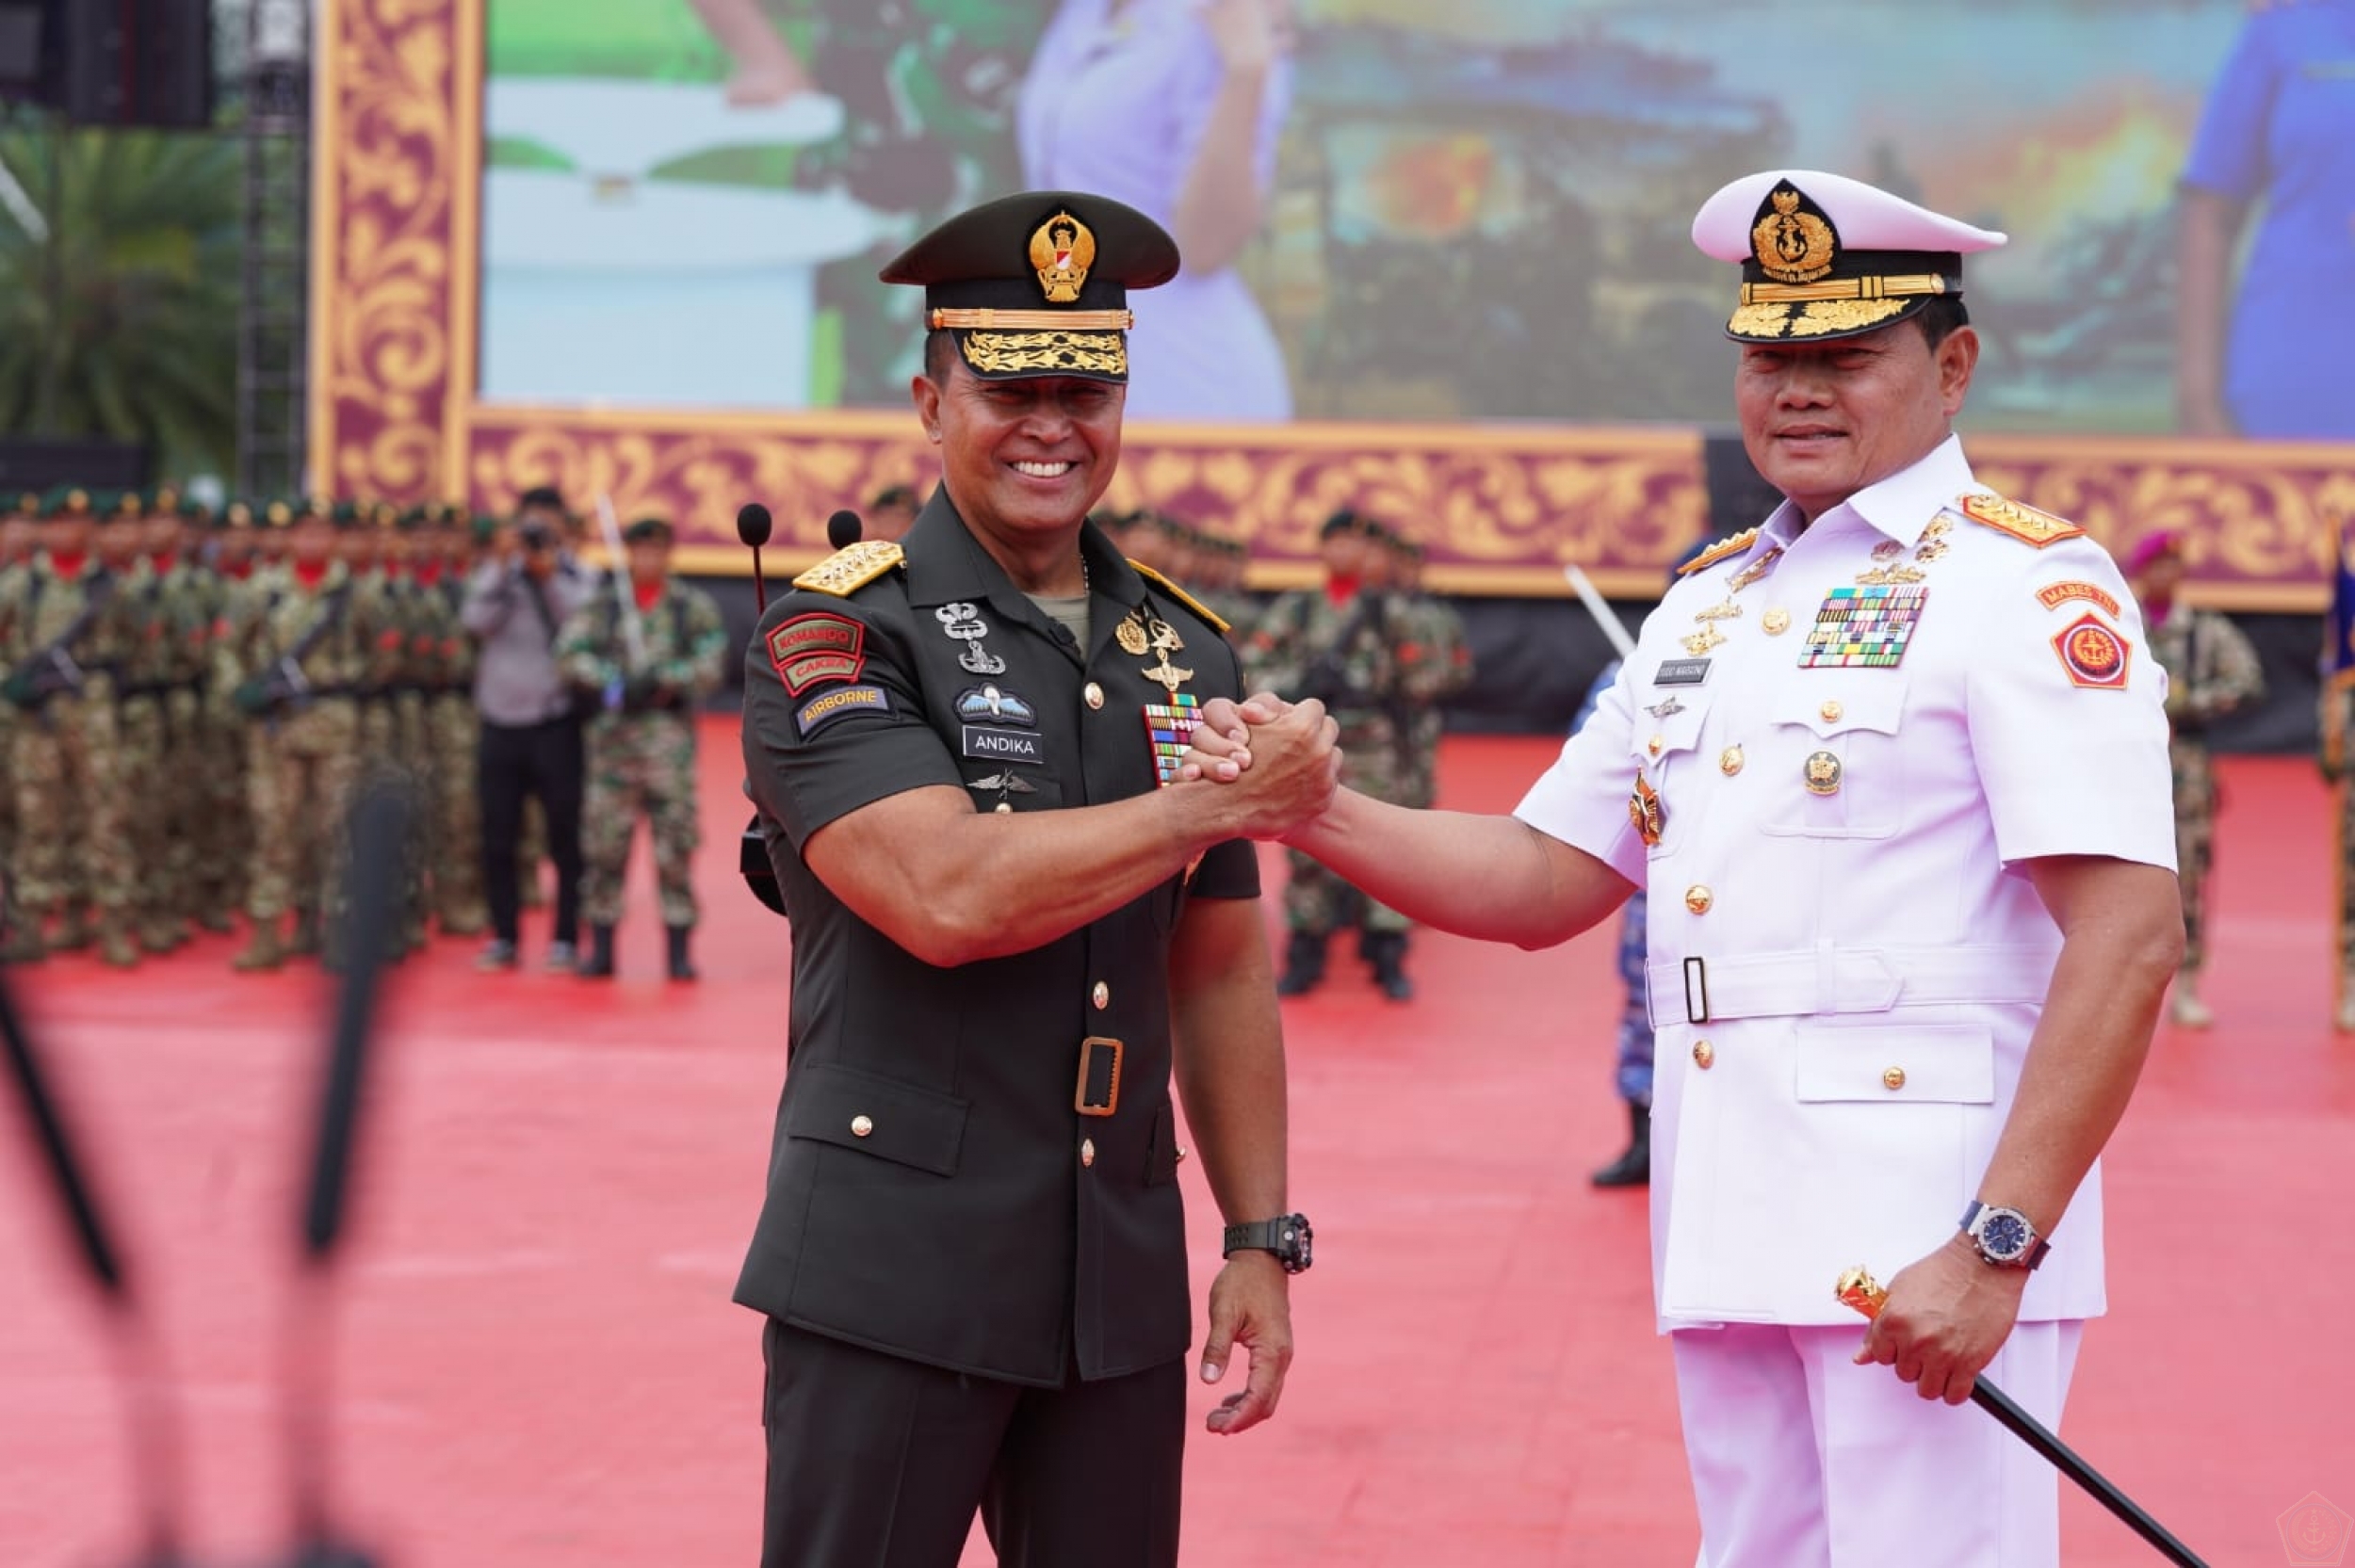 Jabatan Panglima TNI Diserahterimakan